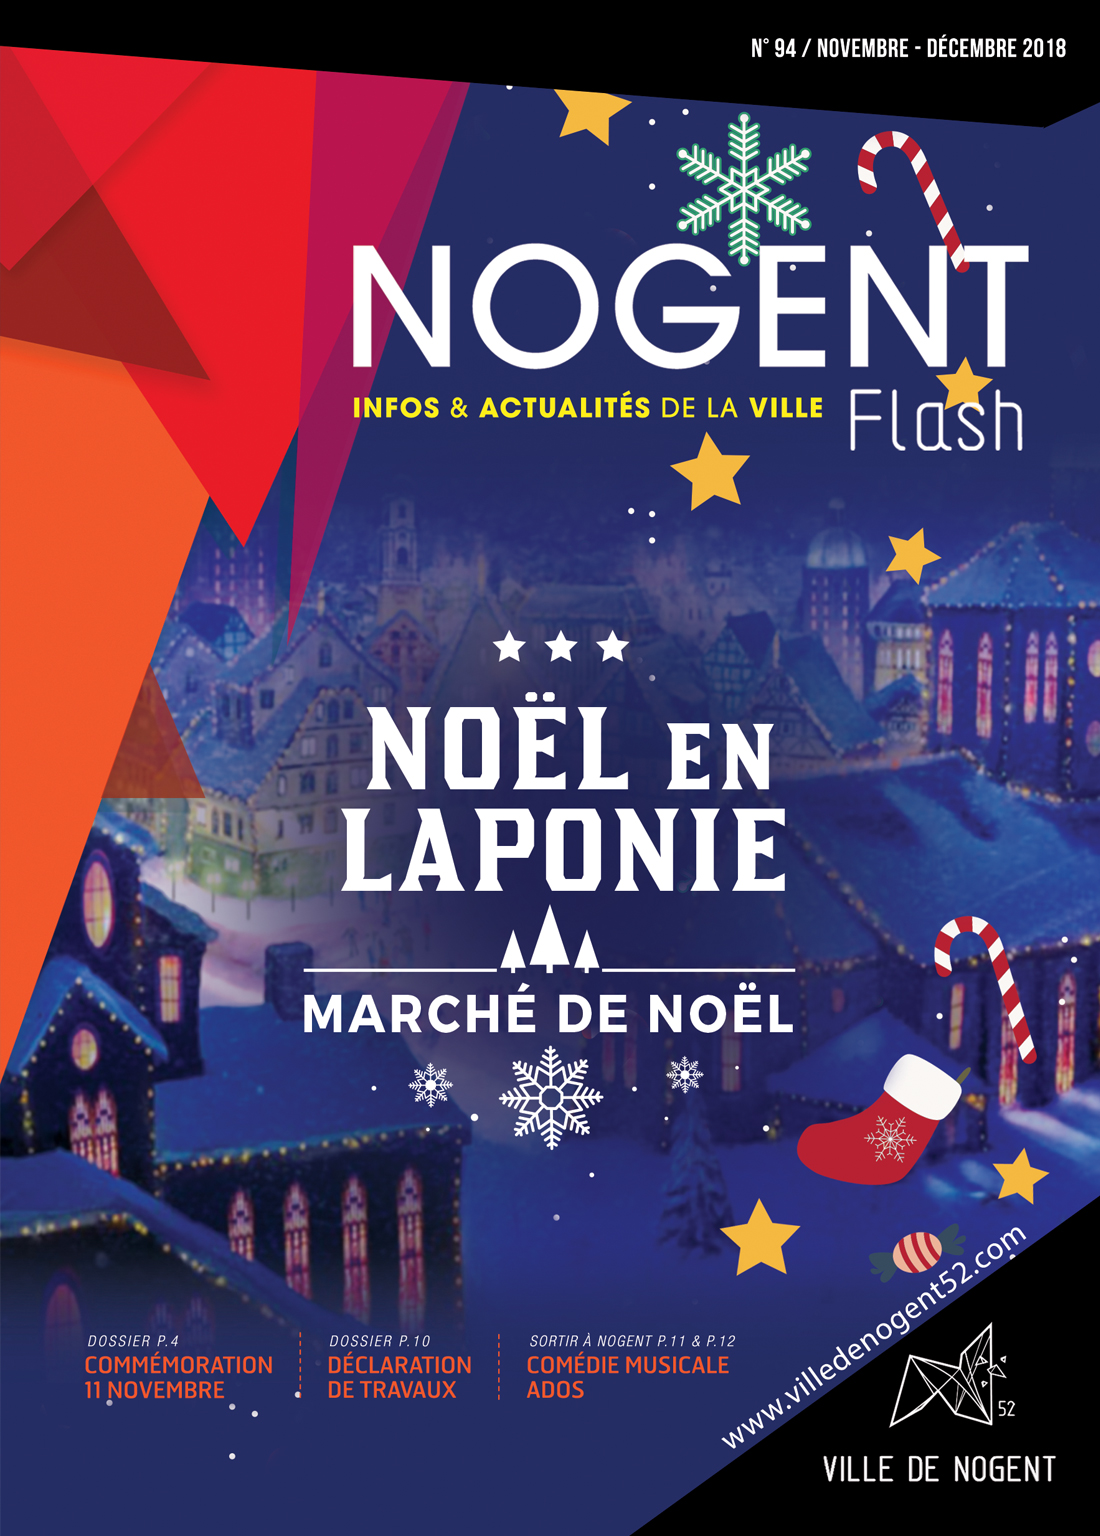 Nogent Flash #94